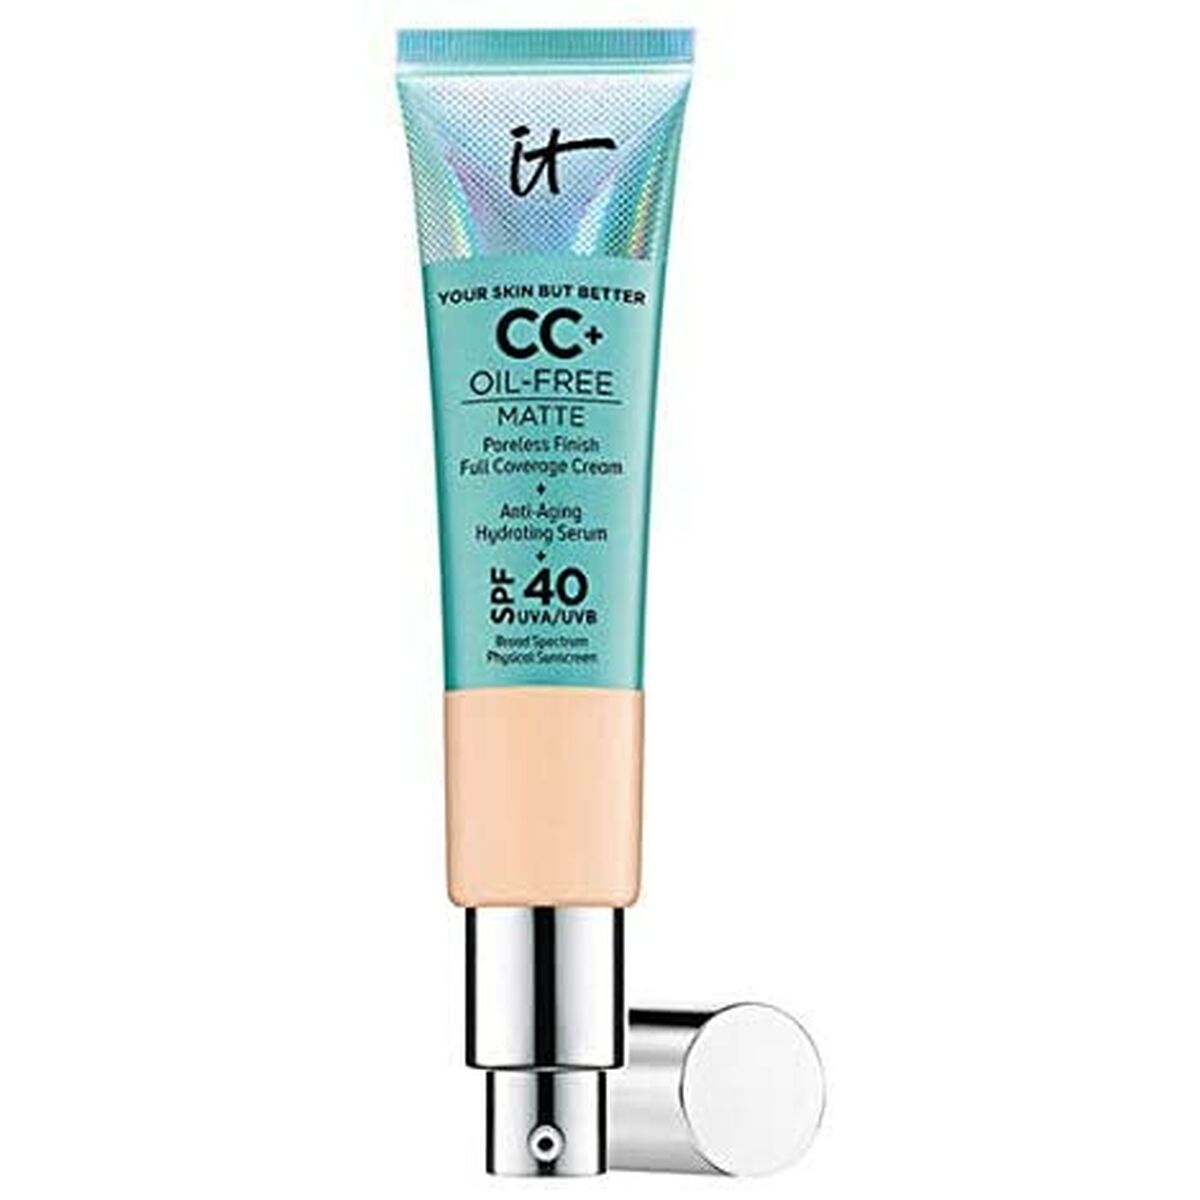 CC Cream It Cosmetics neutral tan Spf 40 32 ml-0